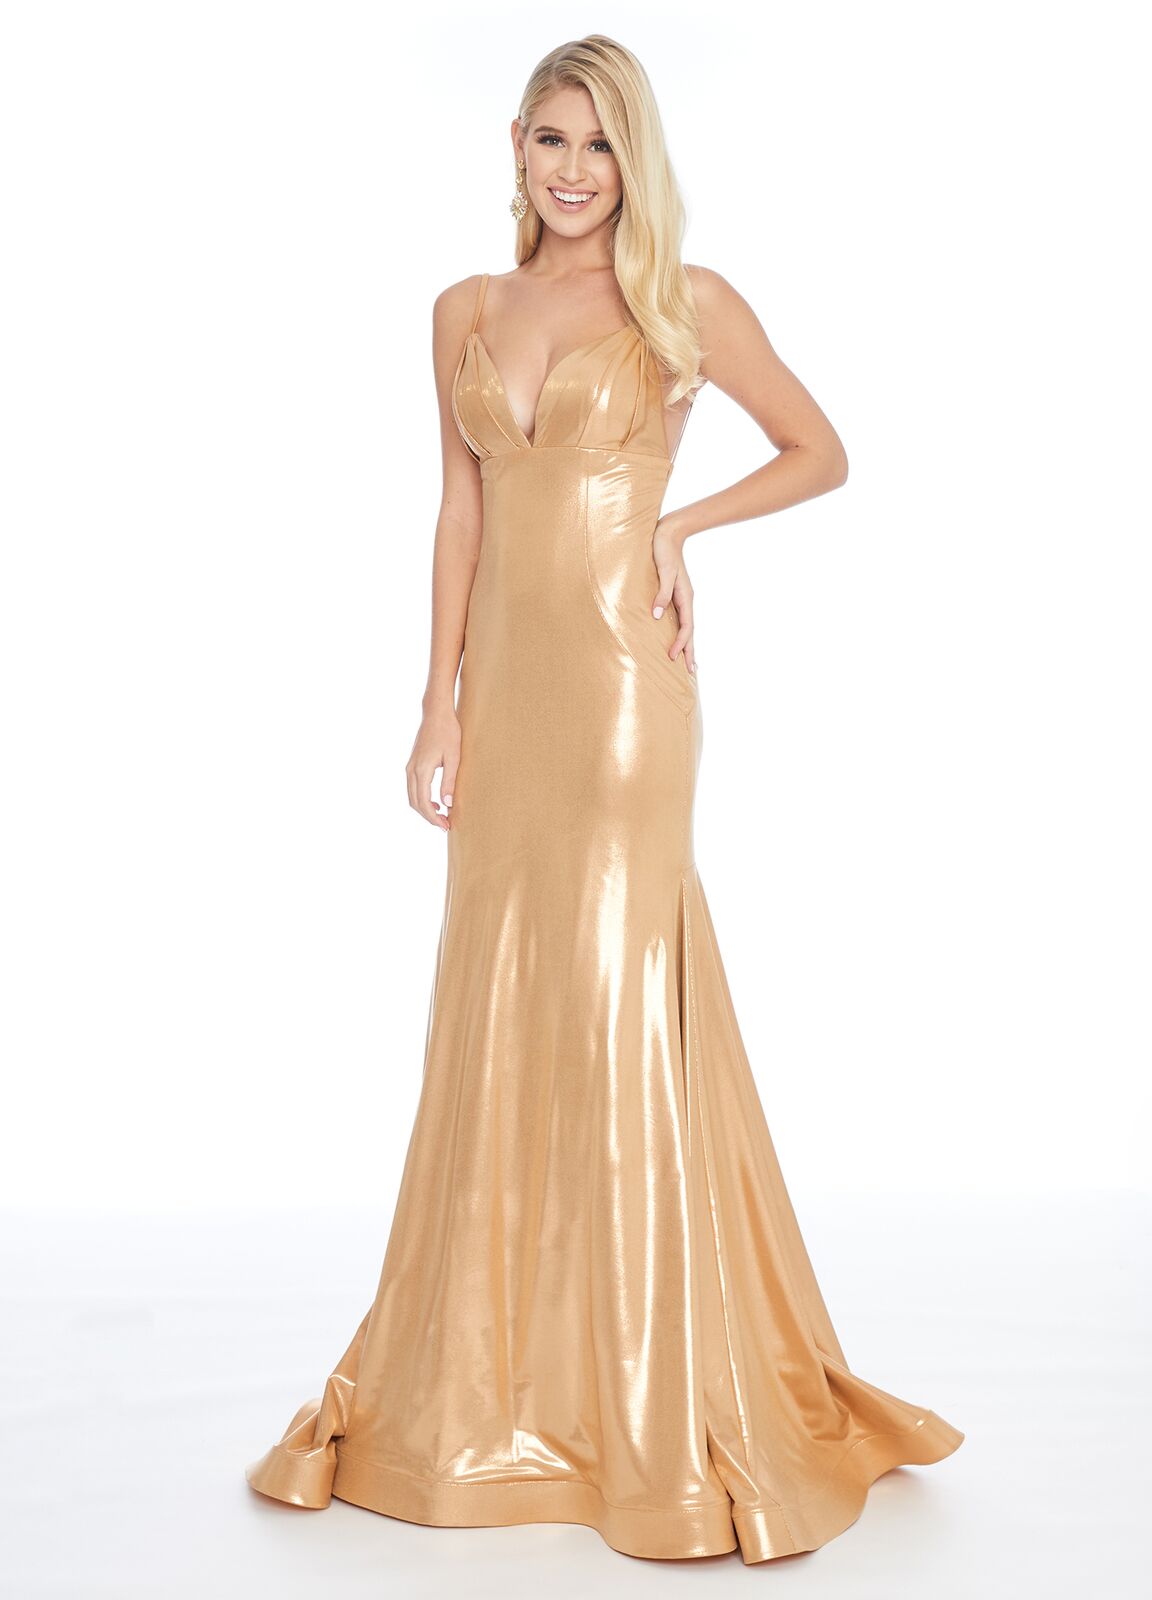 Ashley Lauren 1865 Black Prom Dress size 4, 8 metallic jersey mermaid Fit & Flare Formal Gown